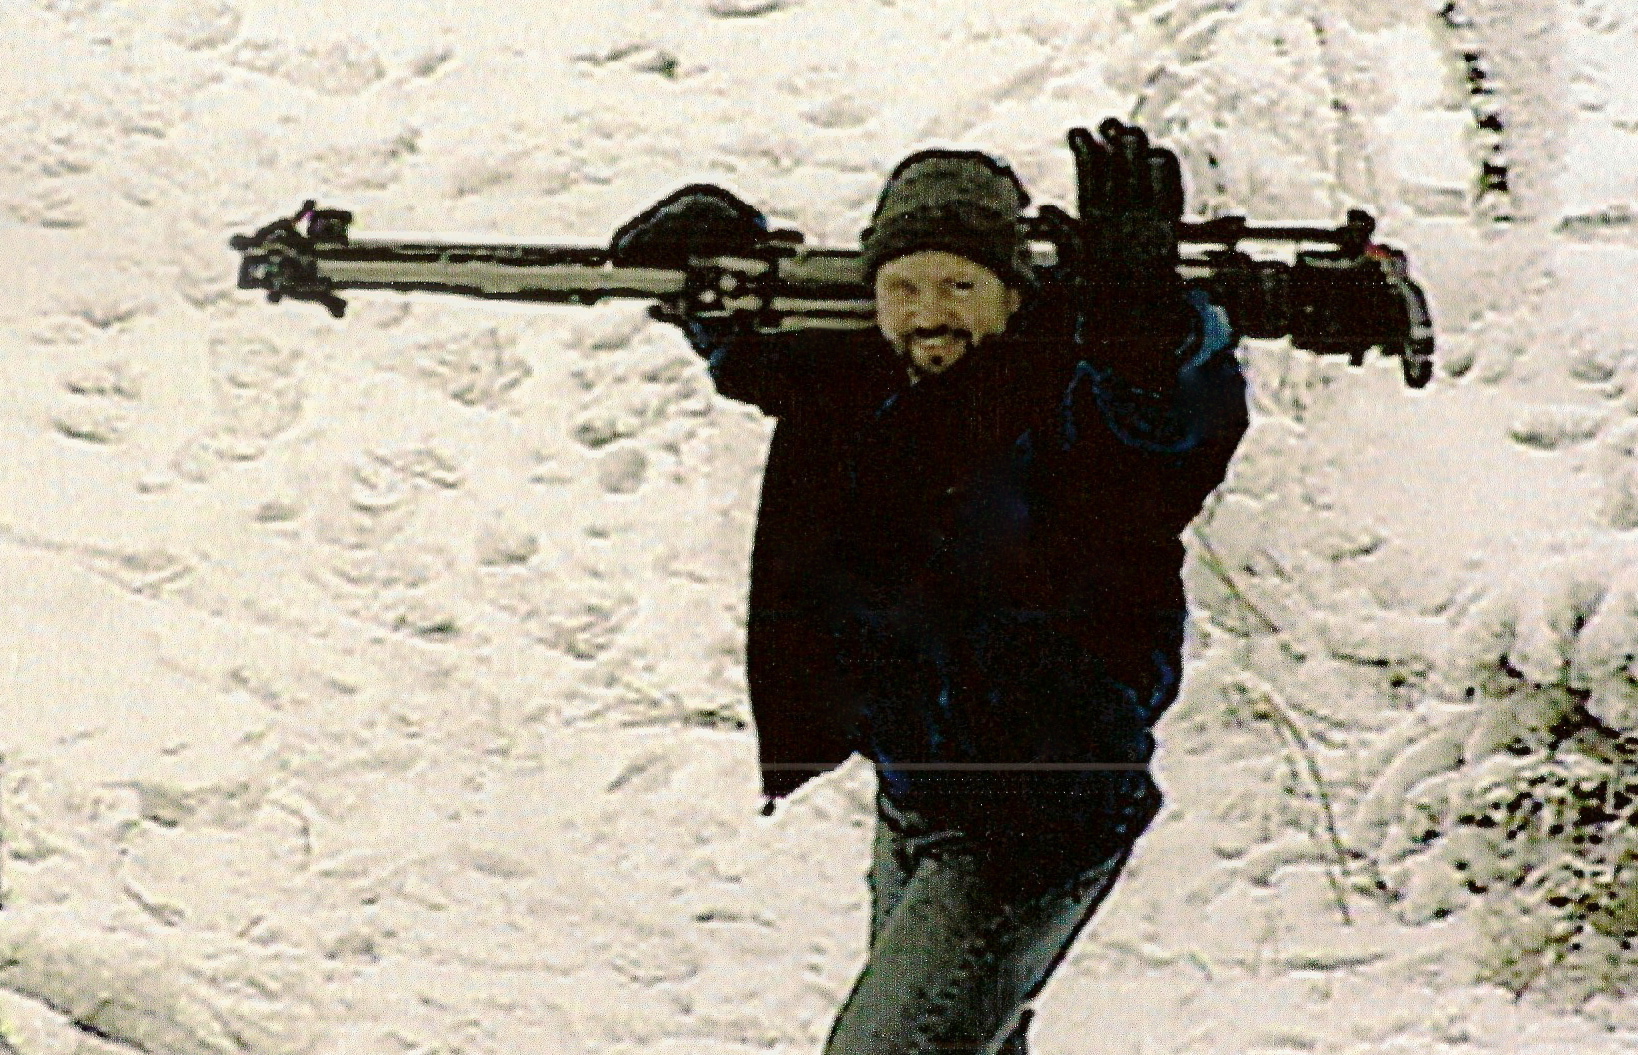 Douglas Wester on location, Chechnya Russia